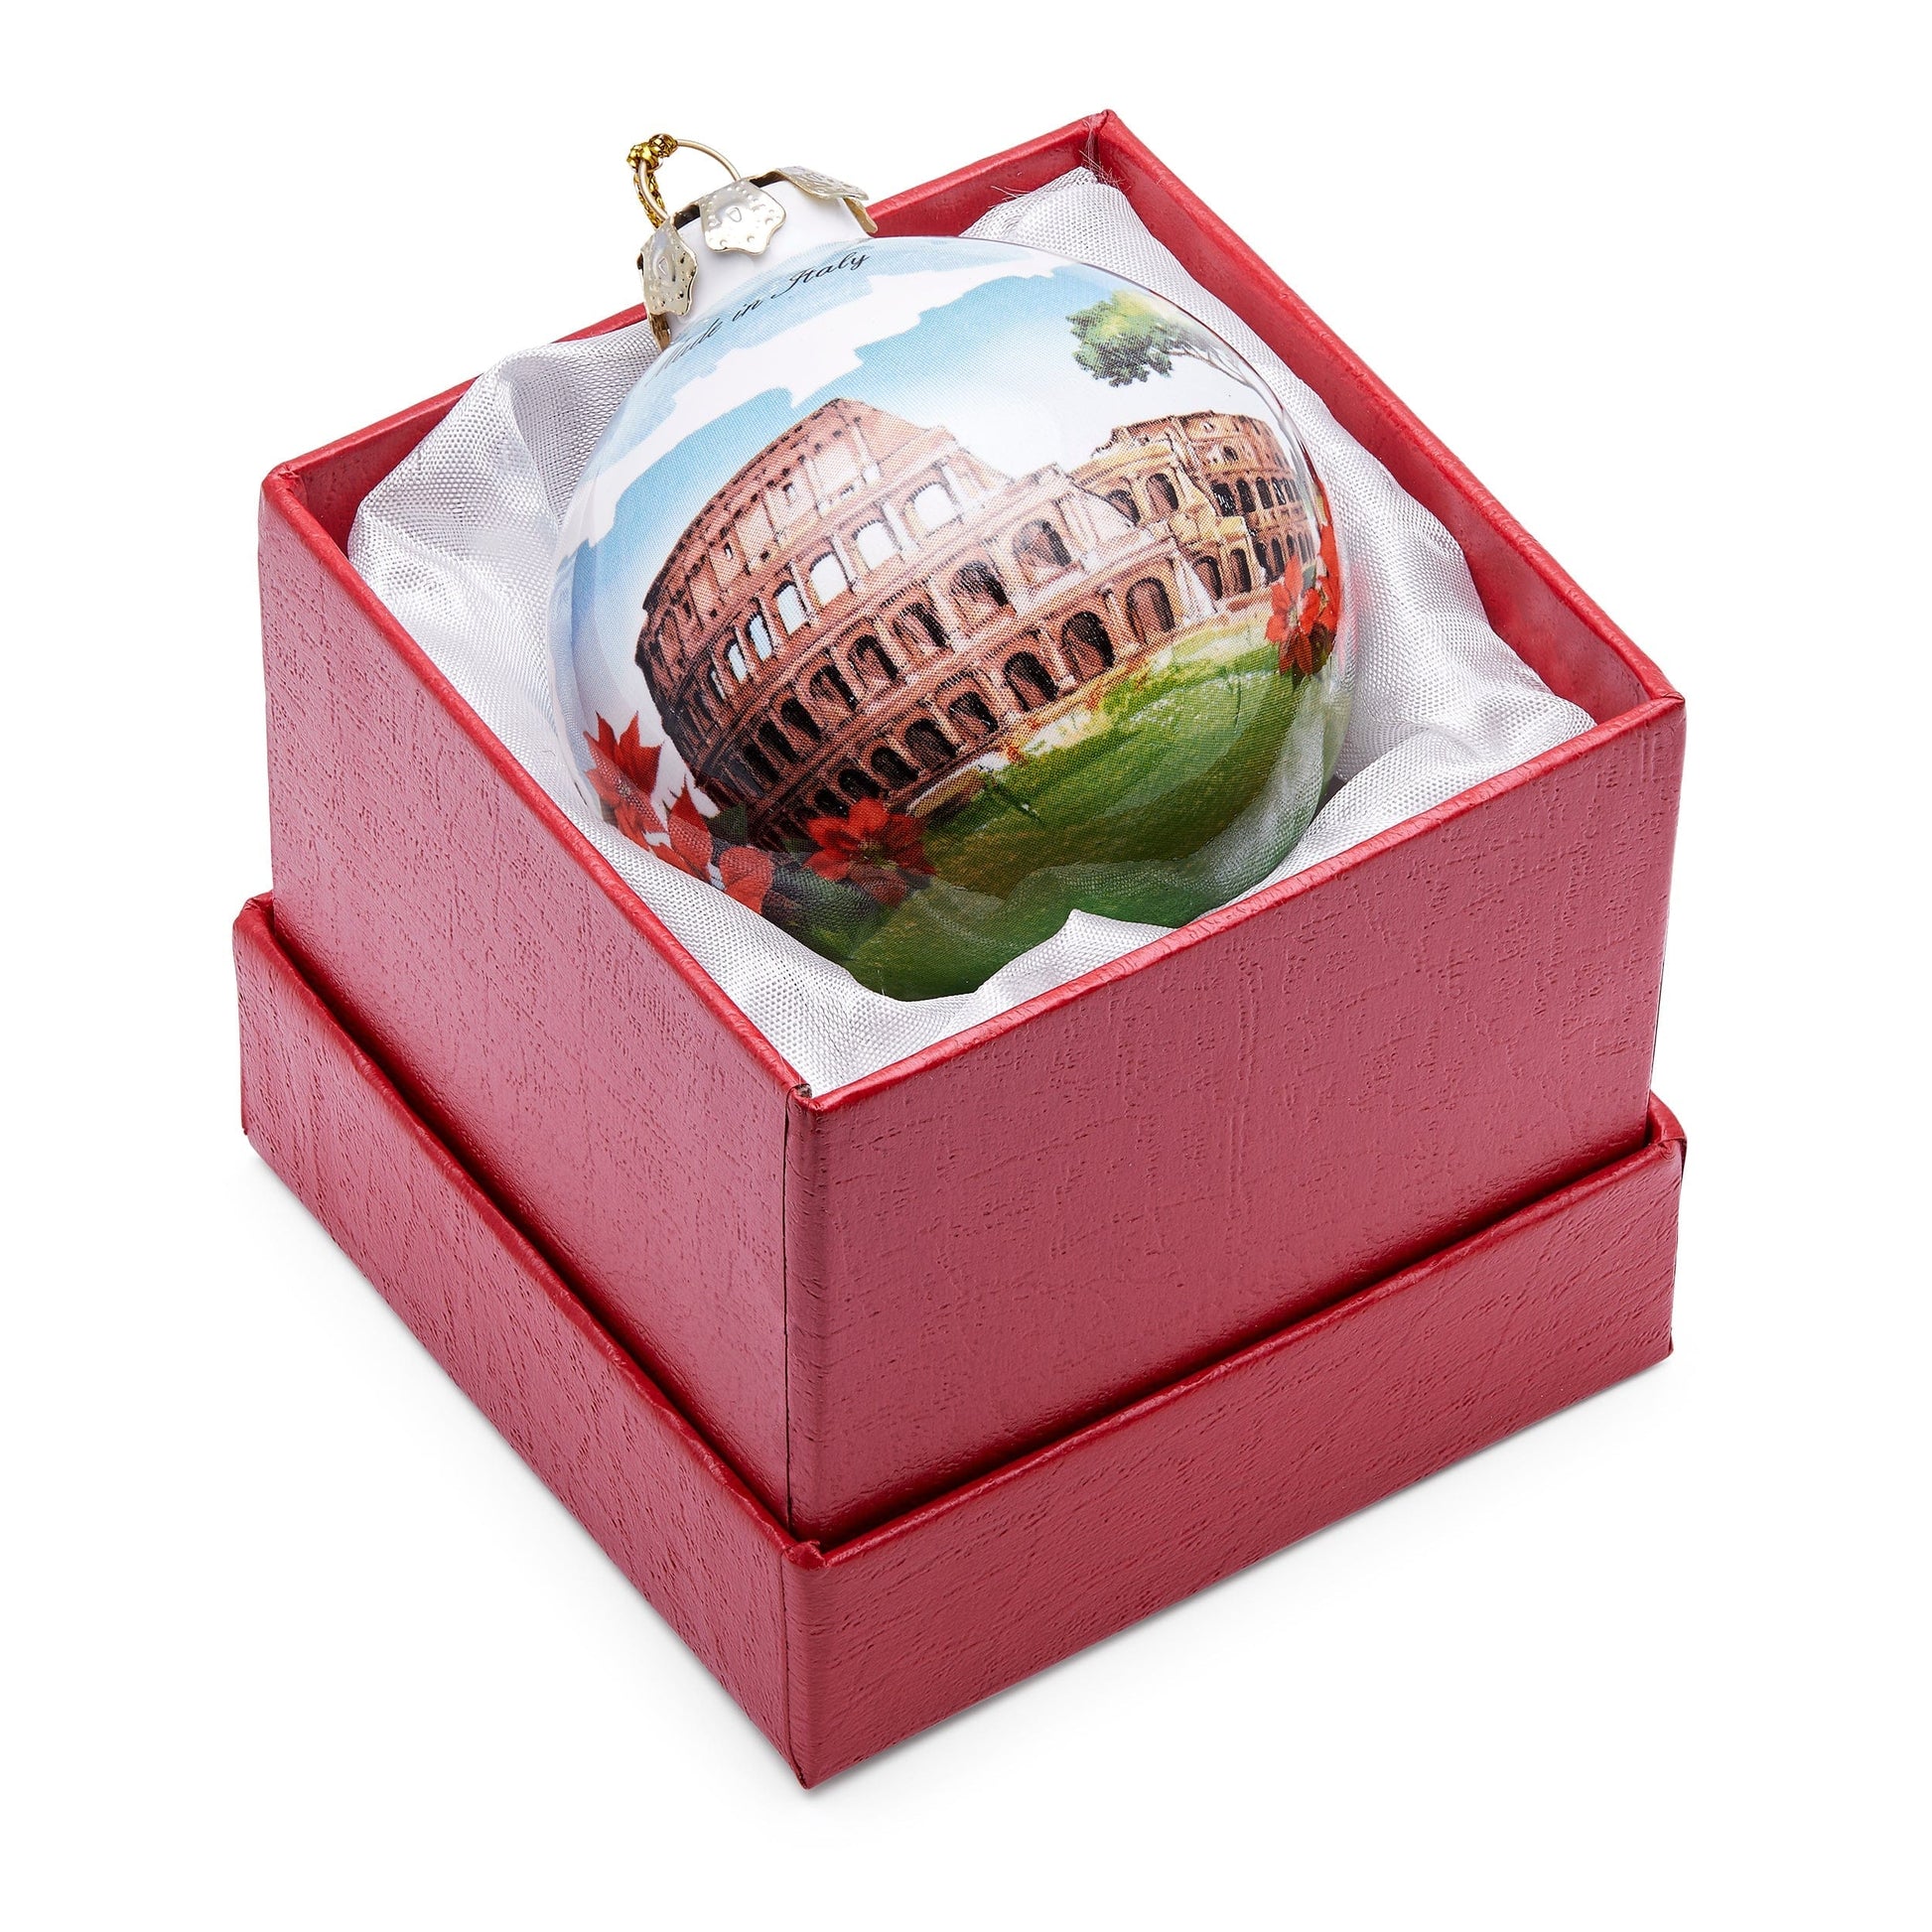 MONDO CATTOLICO Cm 6 (2.4 inches) Ceramic Christmas Tree Ball Saint Peter Basilica-Colosseum with Flowers"